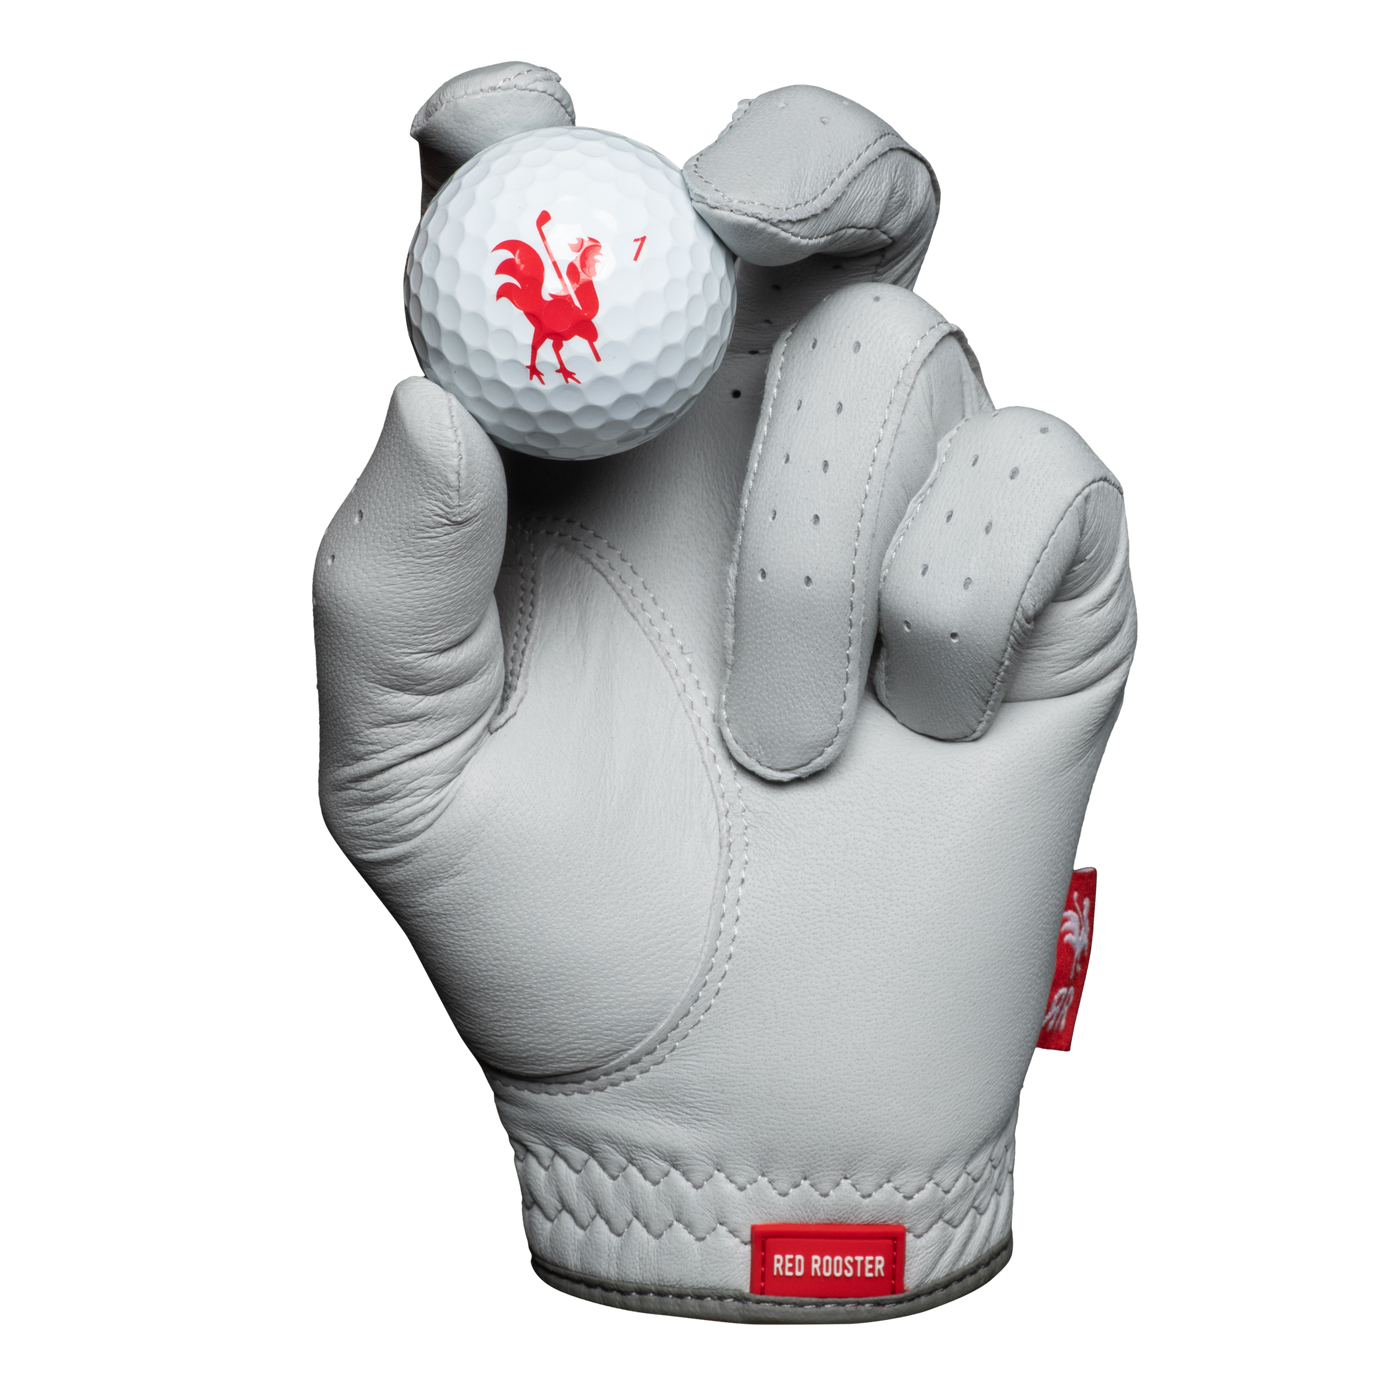 The Scots Silver golf glove holding golf ball